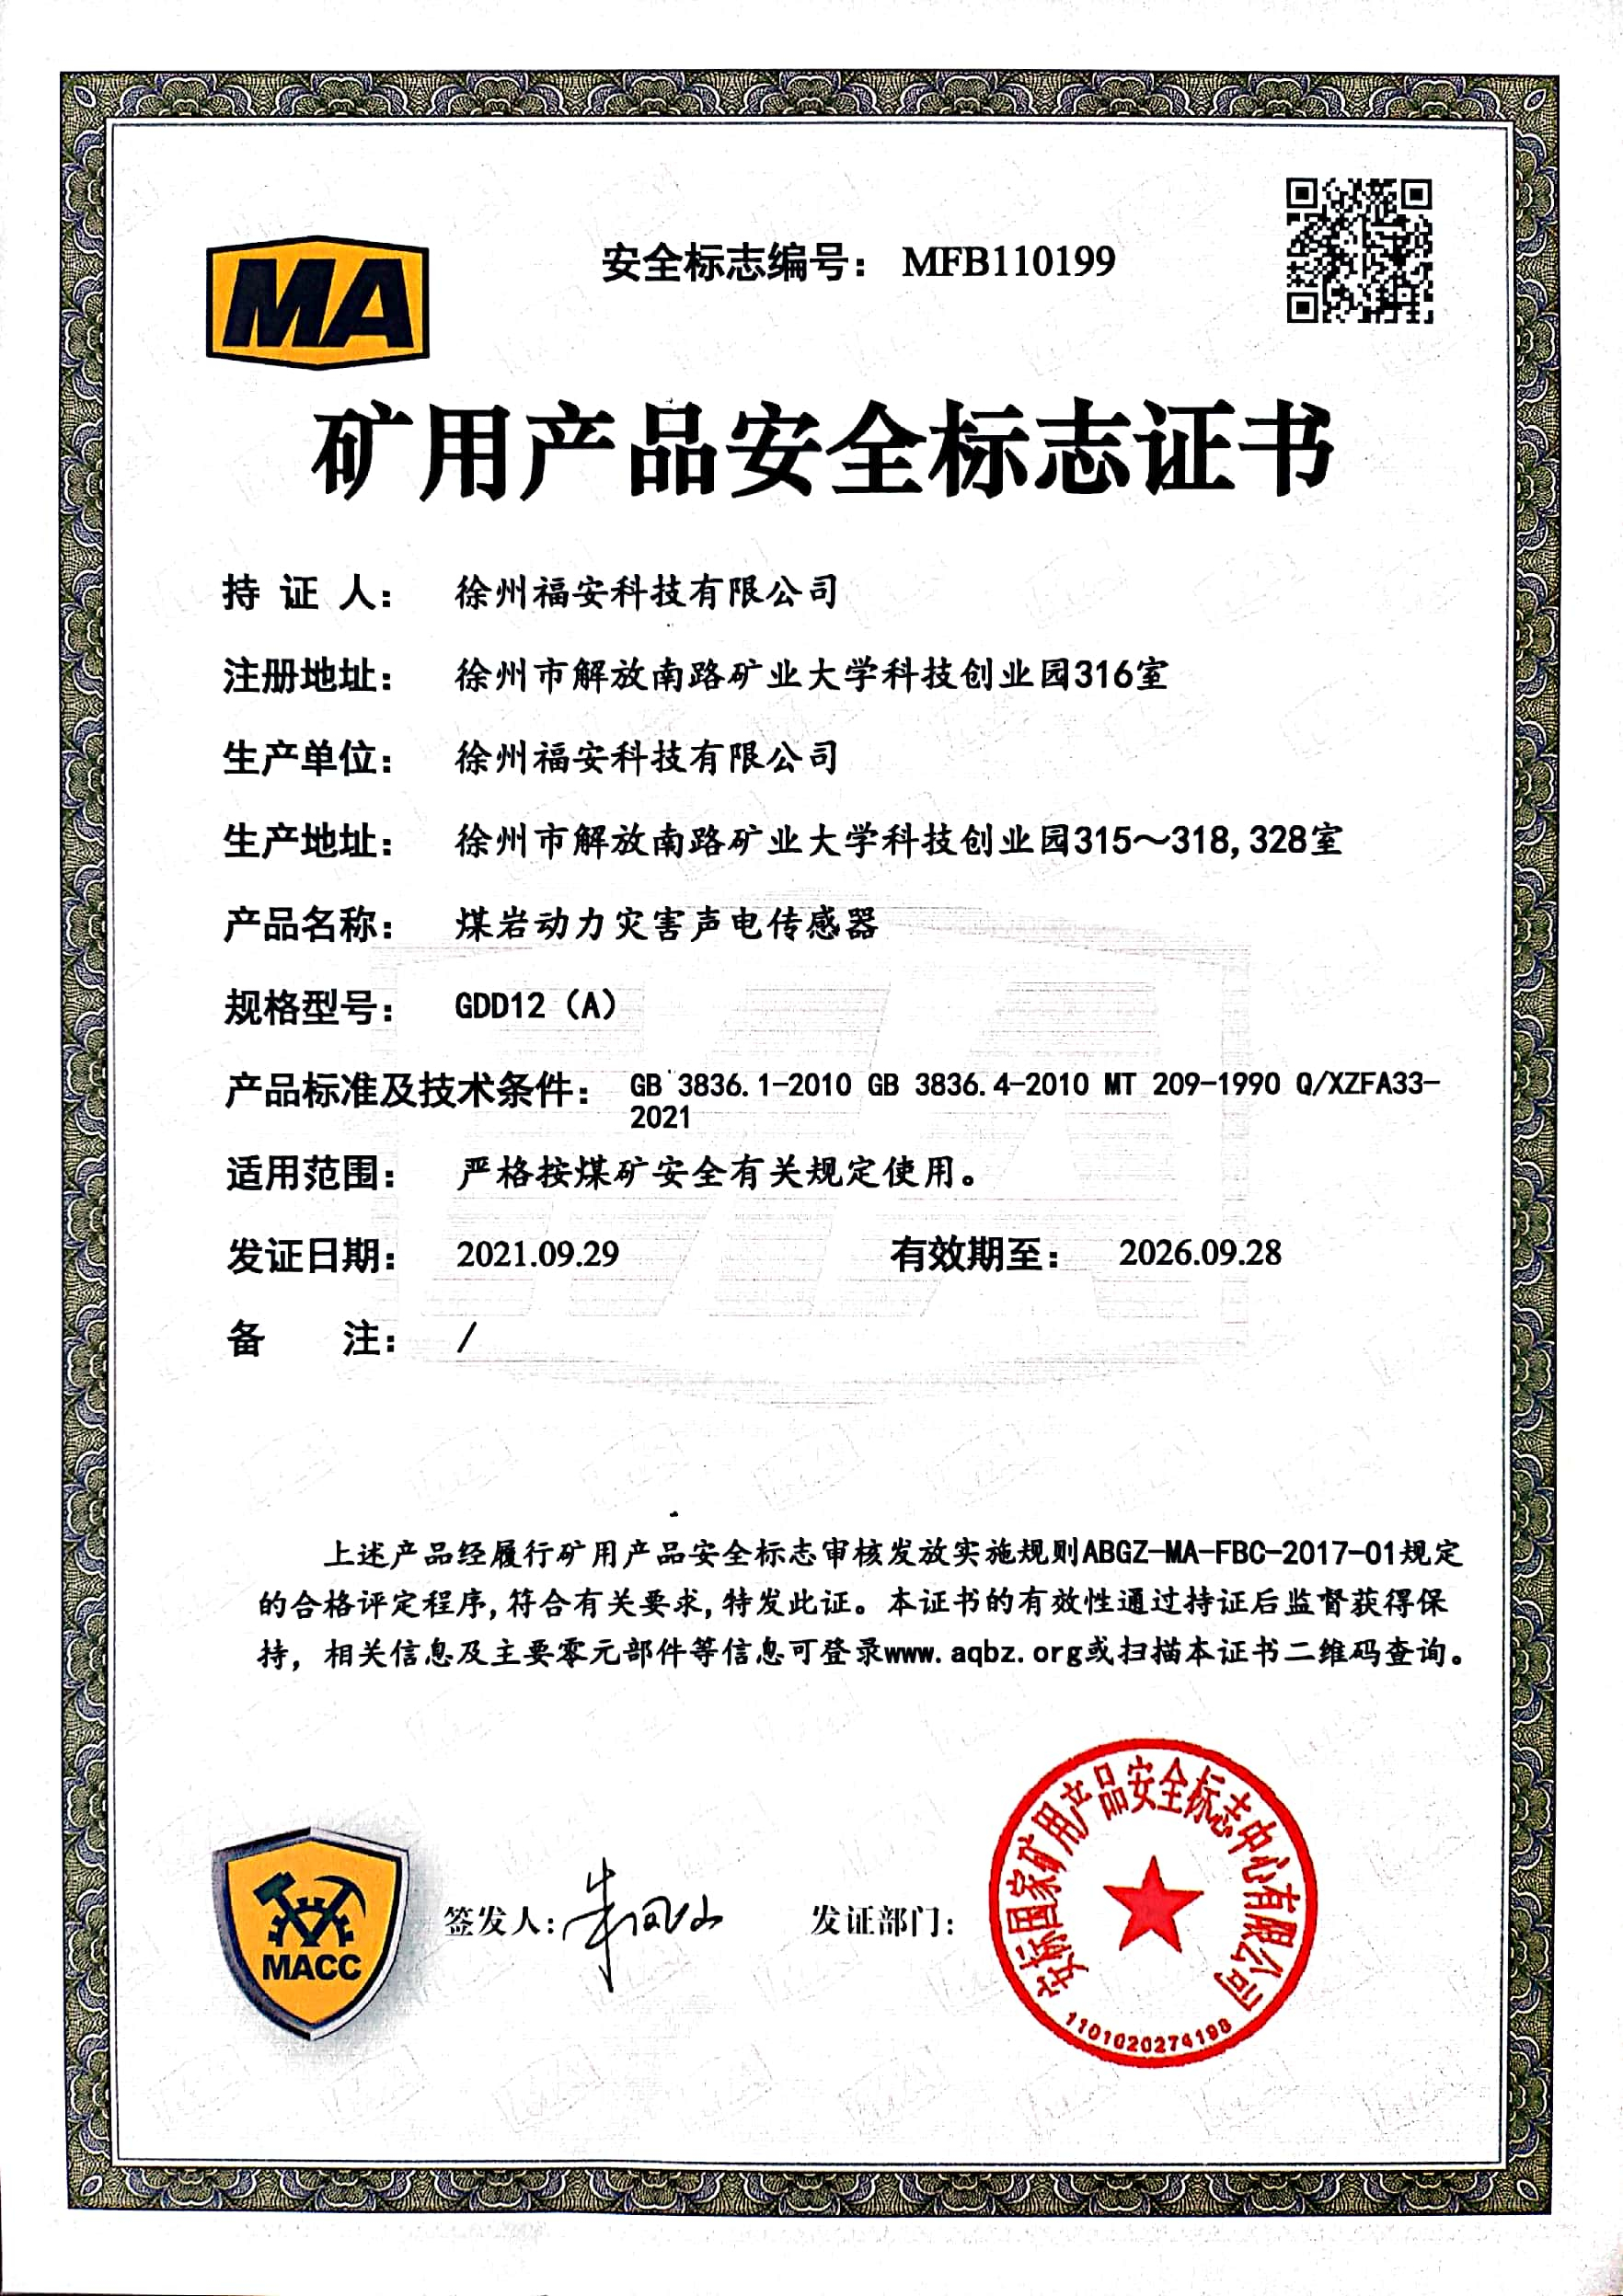 GDD12（A）煤岩动力灾害声电传感器-矿用产品安全标志证书